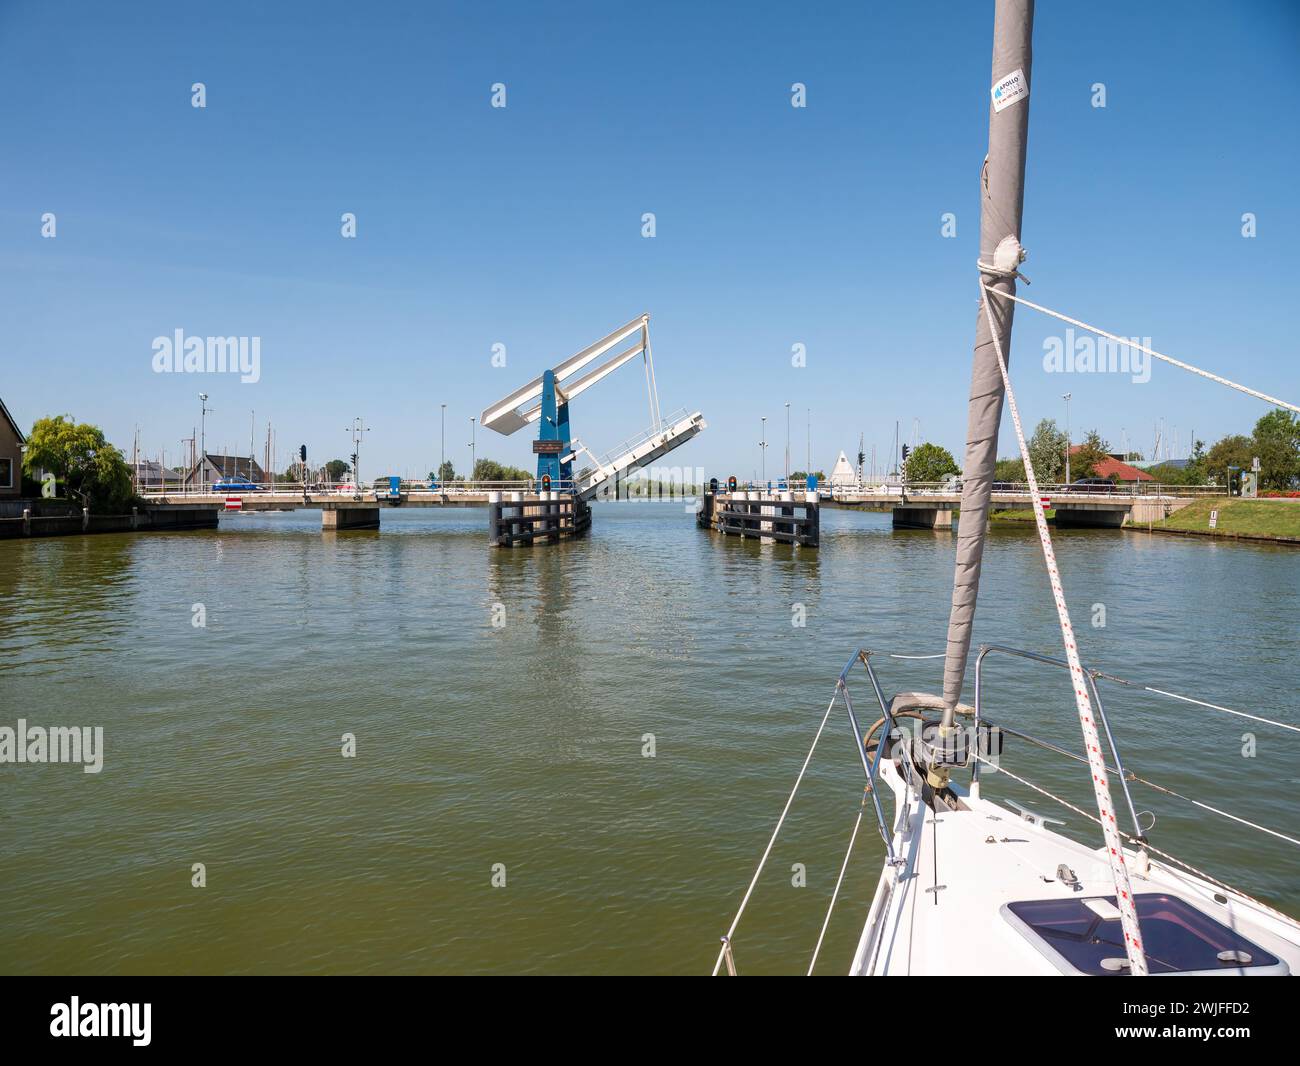 Barca a vela in avvicinamento al ponte in attesa di apertura - 2/4, ponte Warnsebrug sul canale Johan Frisokanaal in Frisia, Paesi Bassi Foto Stock